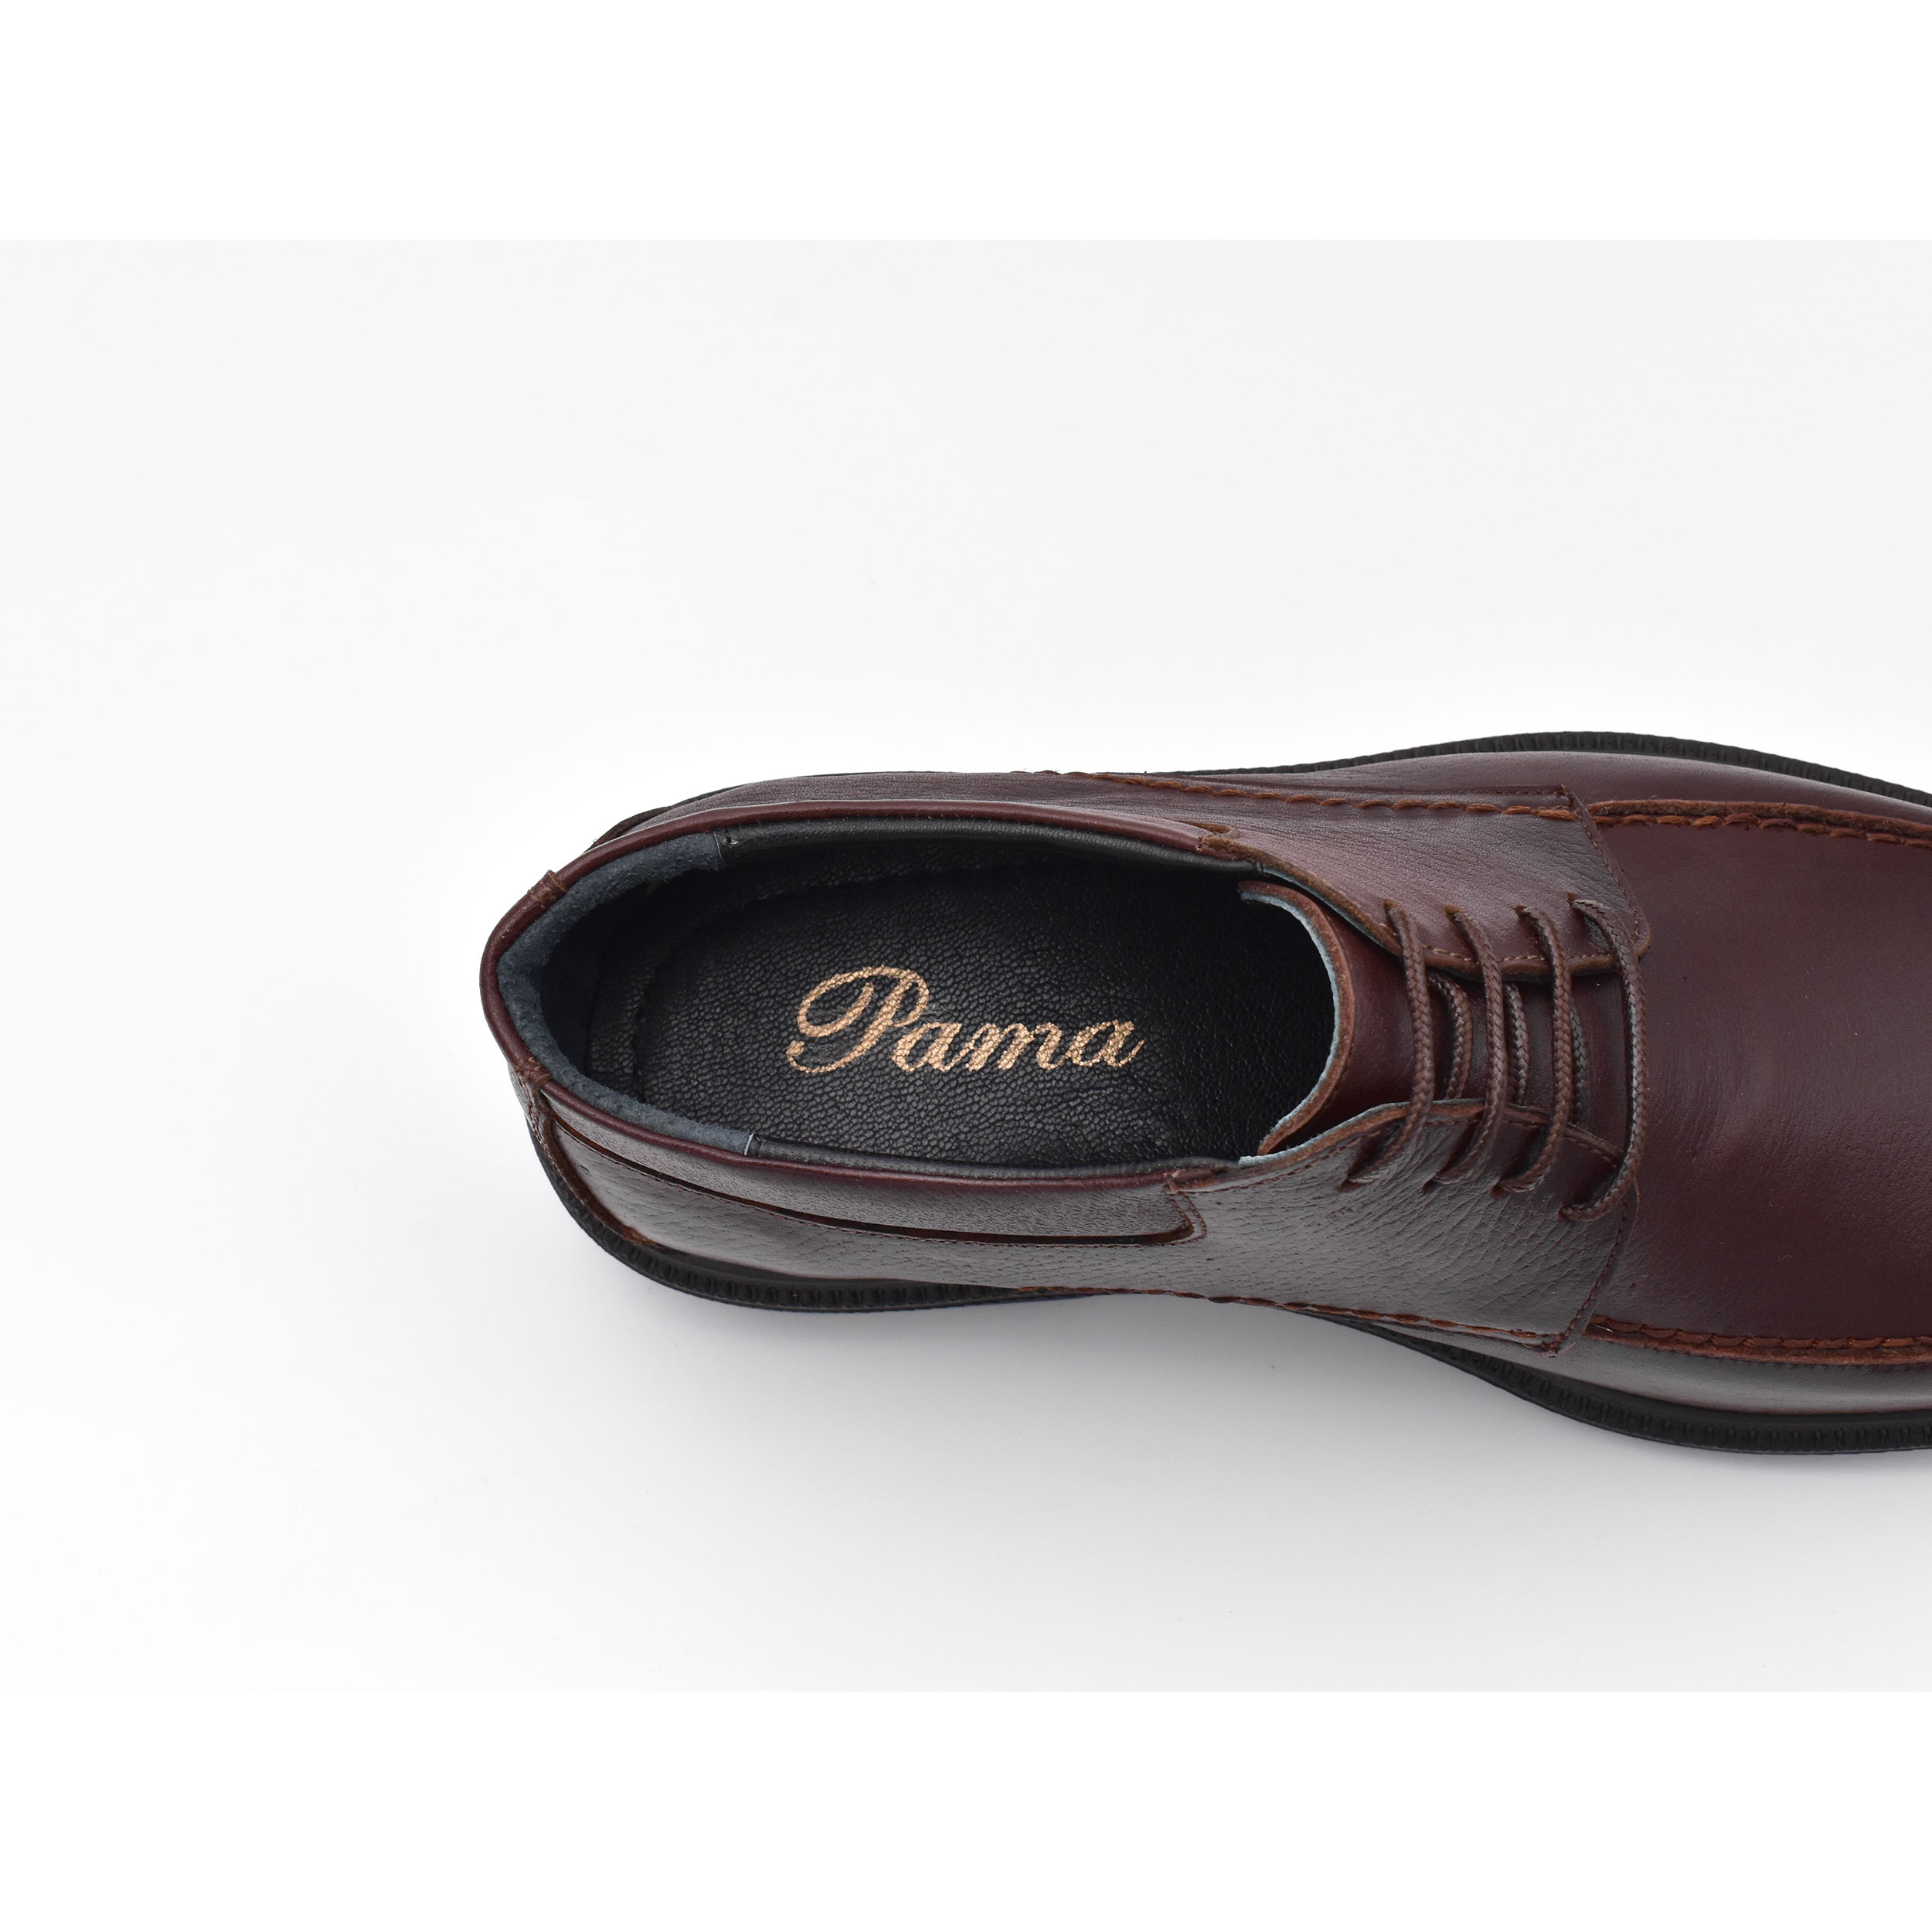 کفش مردانه پاما مدل Oscar کد G1182 -  - 9